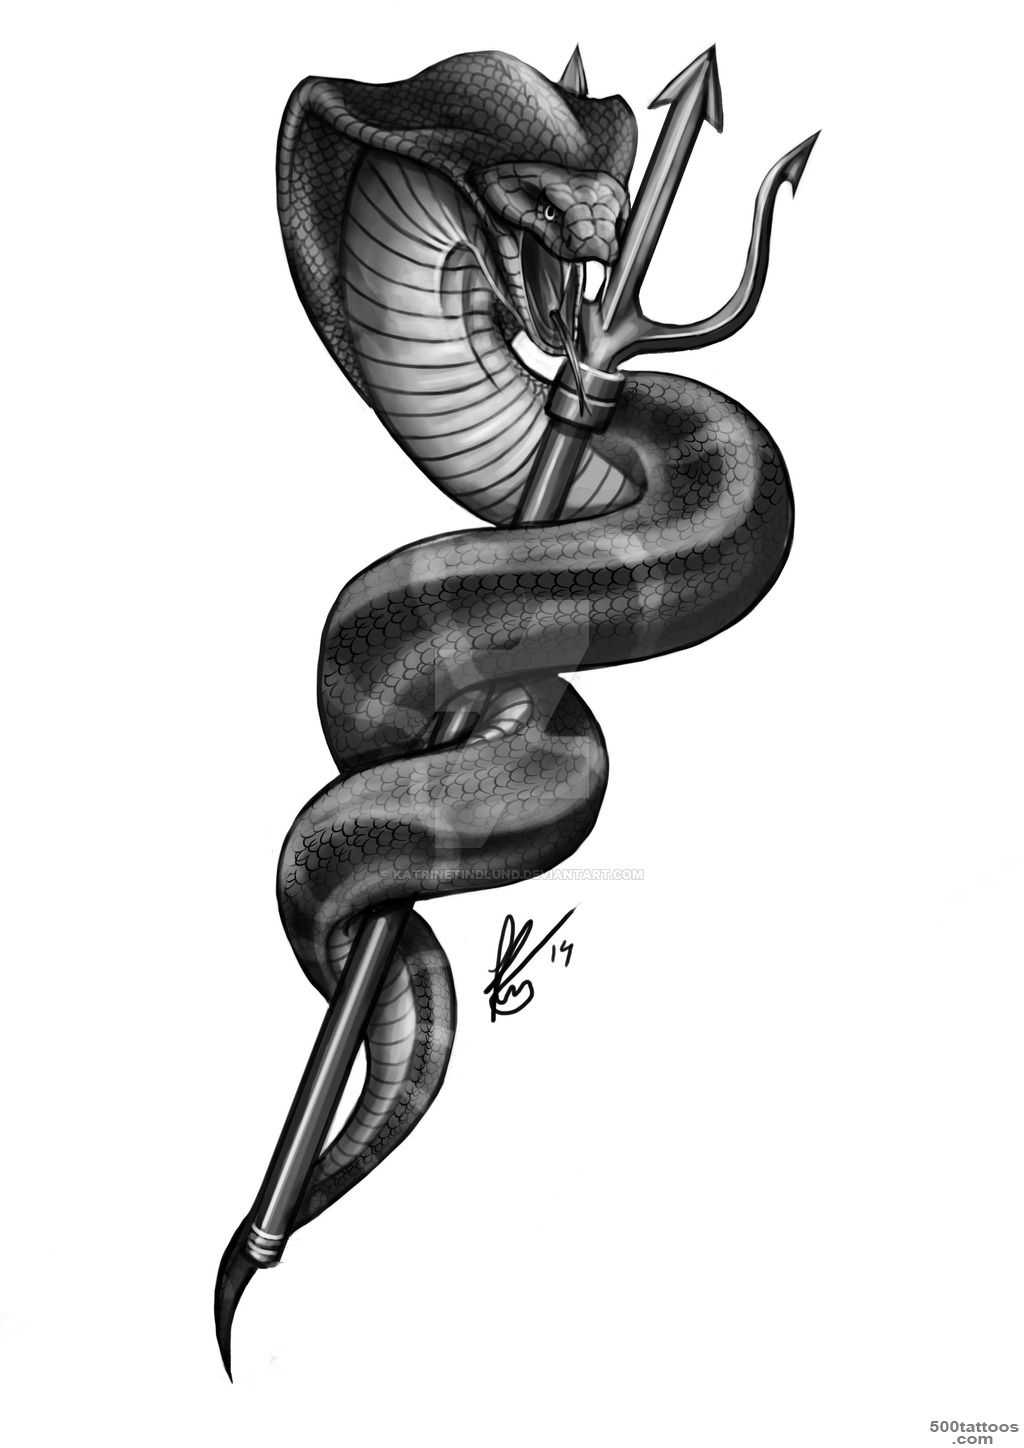 King cobra trident tattoo design by KatrineTindlund on DeviantArt_50